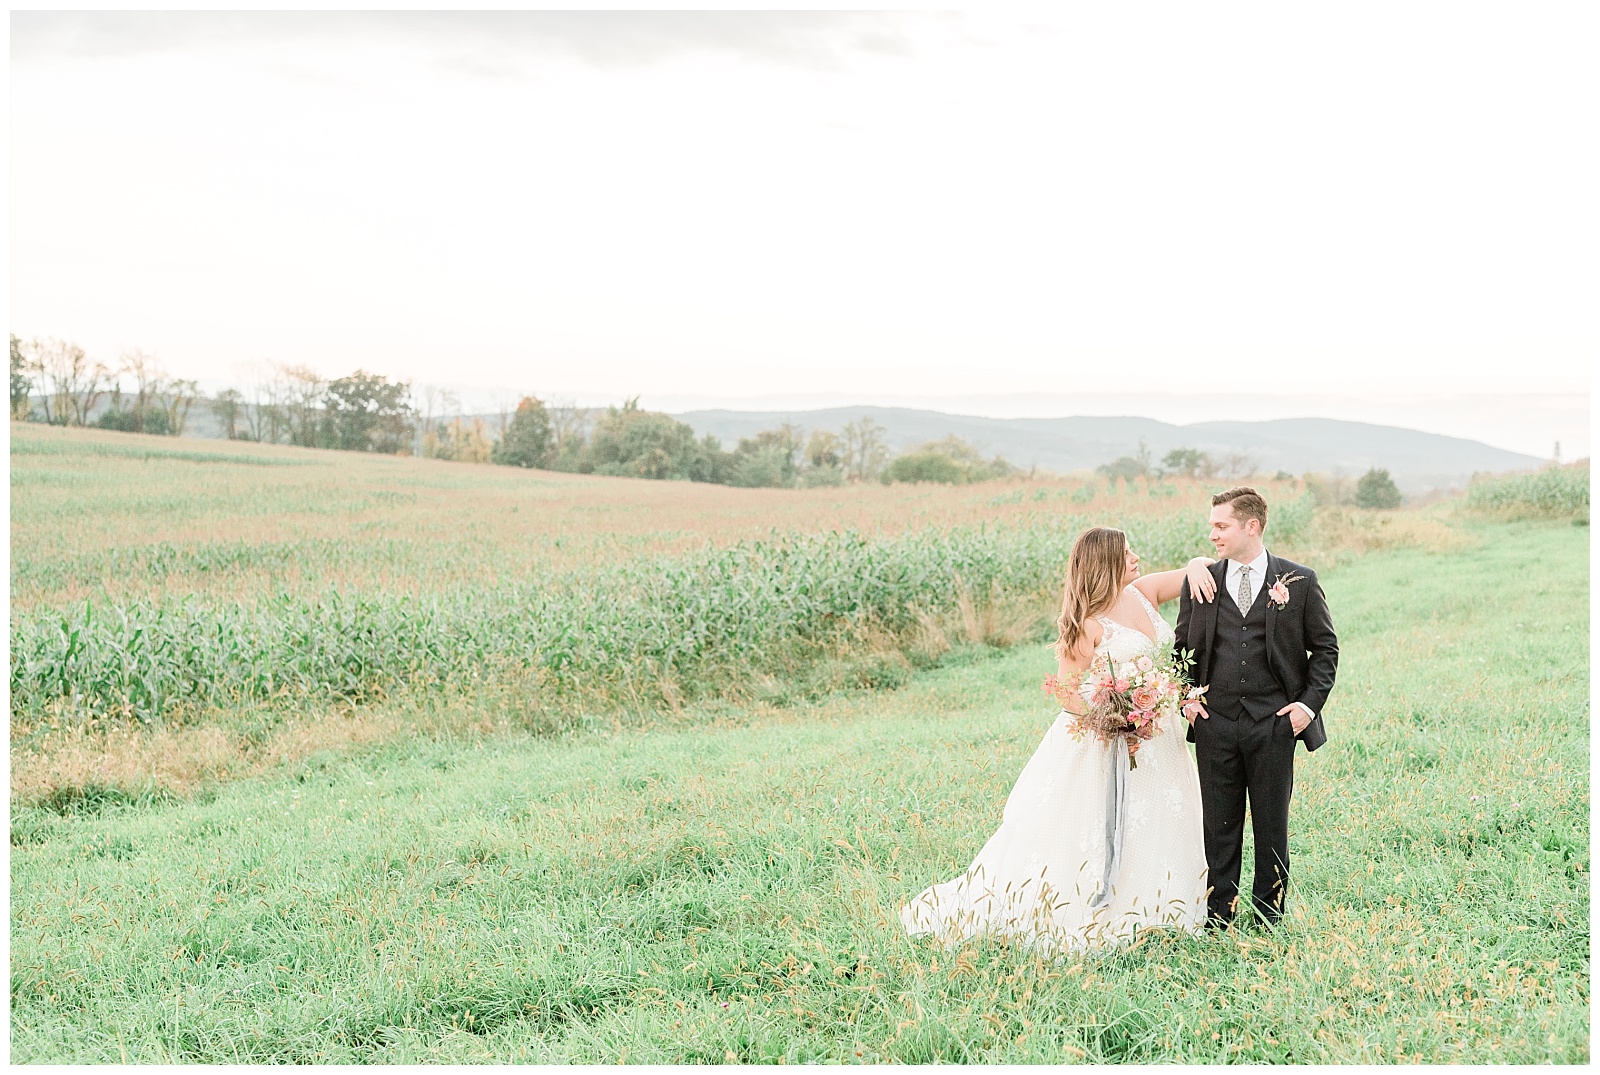 Bride & Groom Portrait,Farm Wedding,Field,Husband & Wife,NY,NY Wedding Photographer,Outdoor,Pioneer Farm,Sunset,Sunset portraits,Tall Grass,Unique Wedding Venues,Warwick,